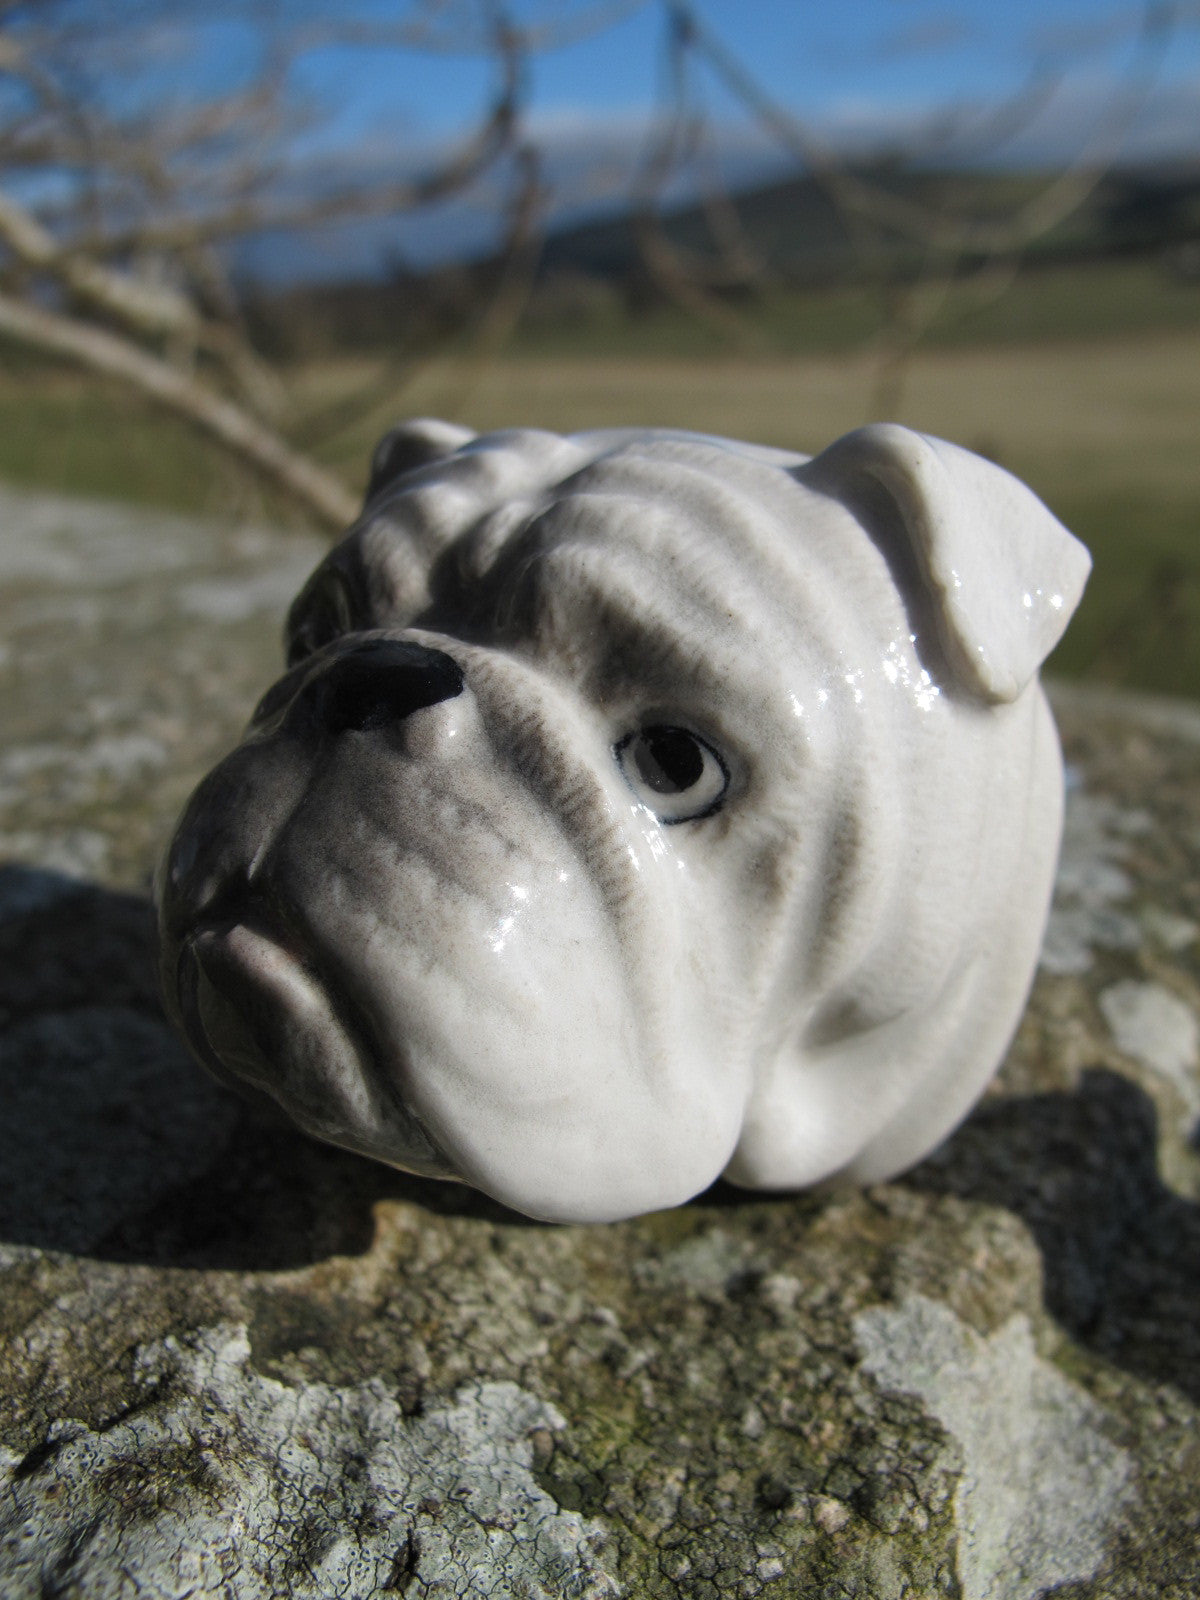 Bulldog Head Doorknob